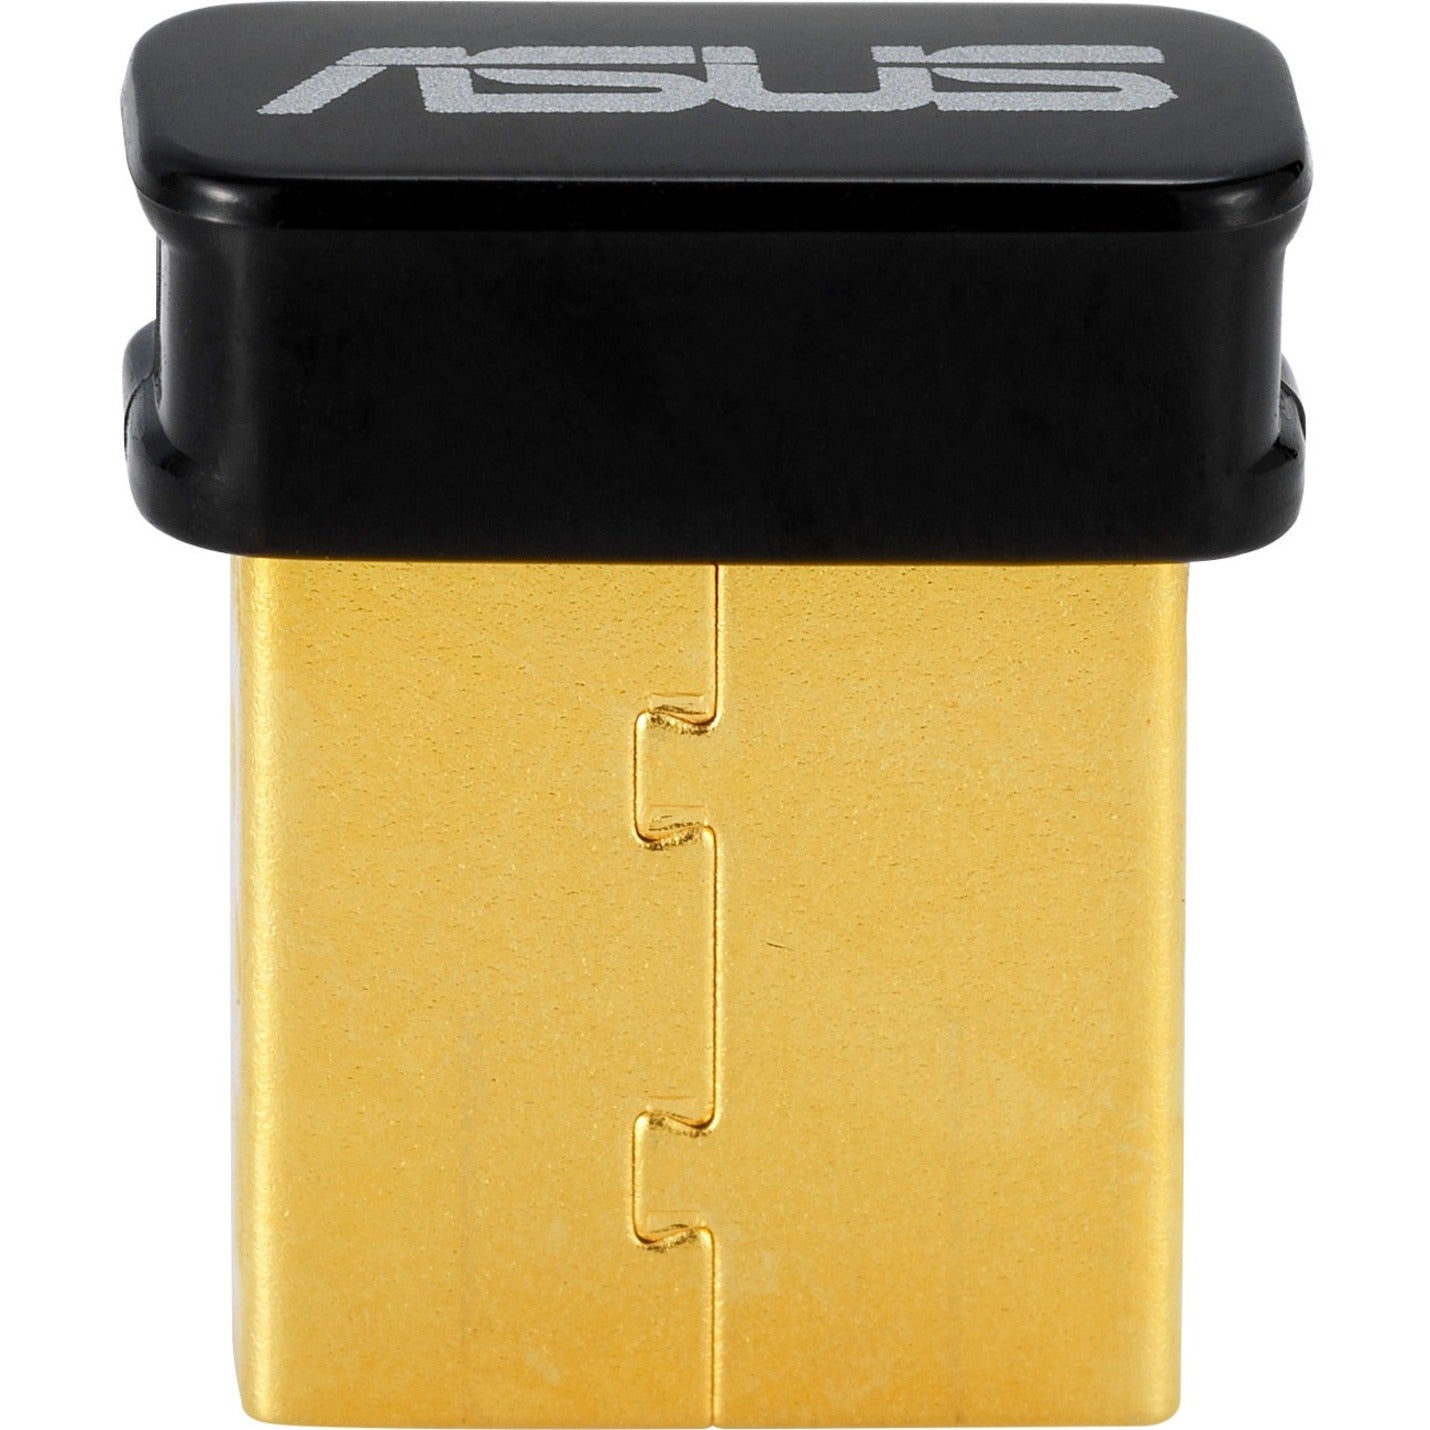 Asus USB-BT500 Bluetooth 5.0 USB Adapter, Ultra Small Design, 2 Year Limited Warranty, Swiss Origin